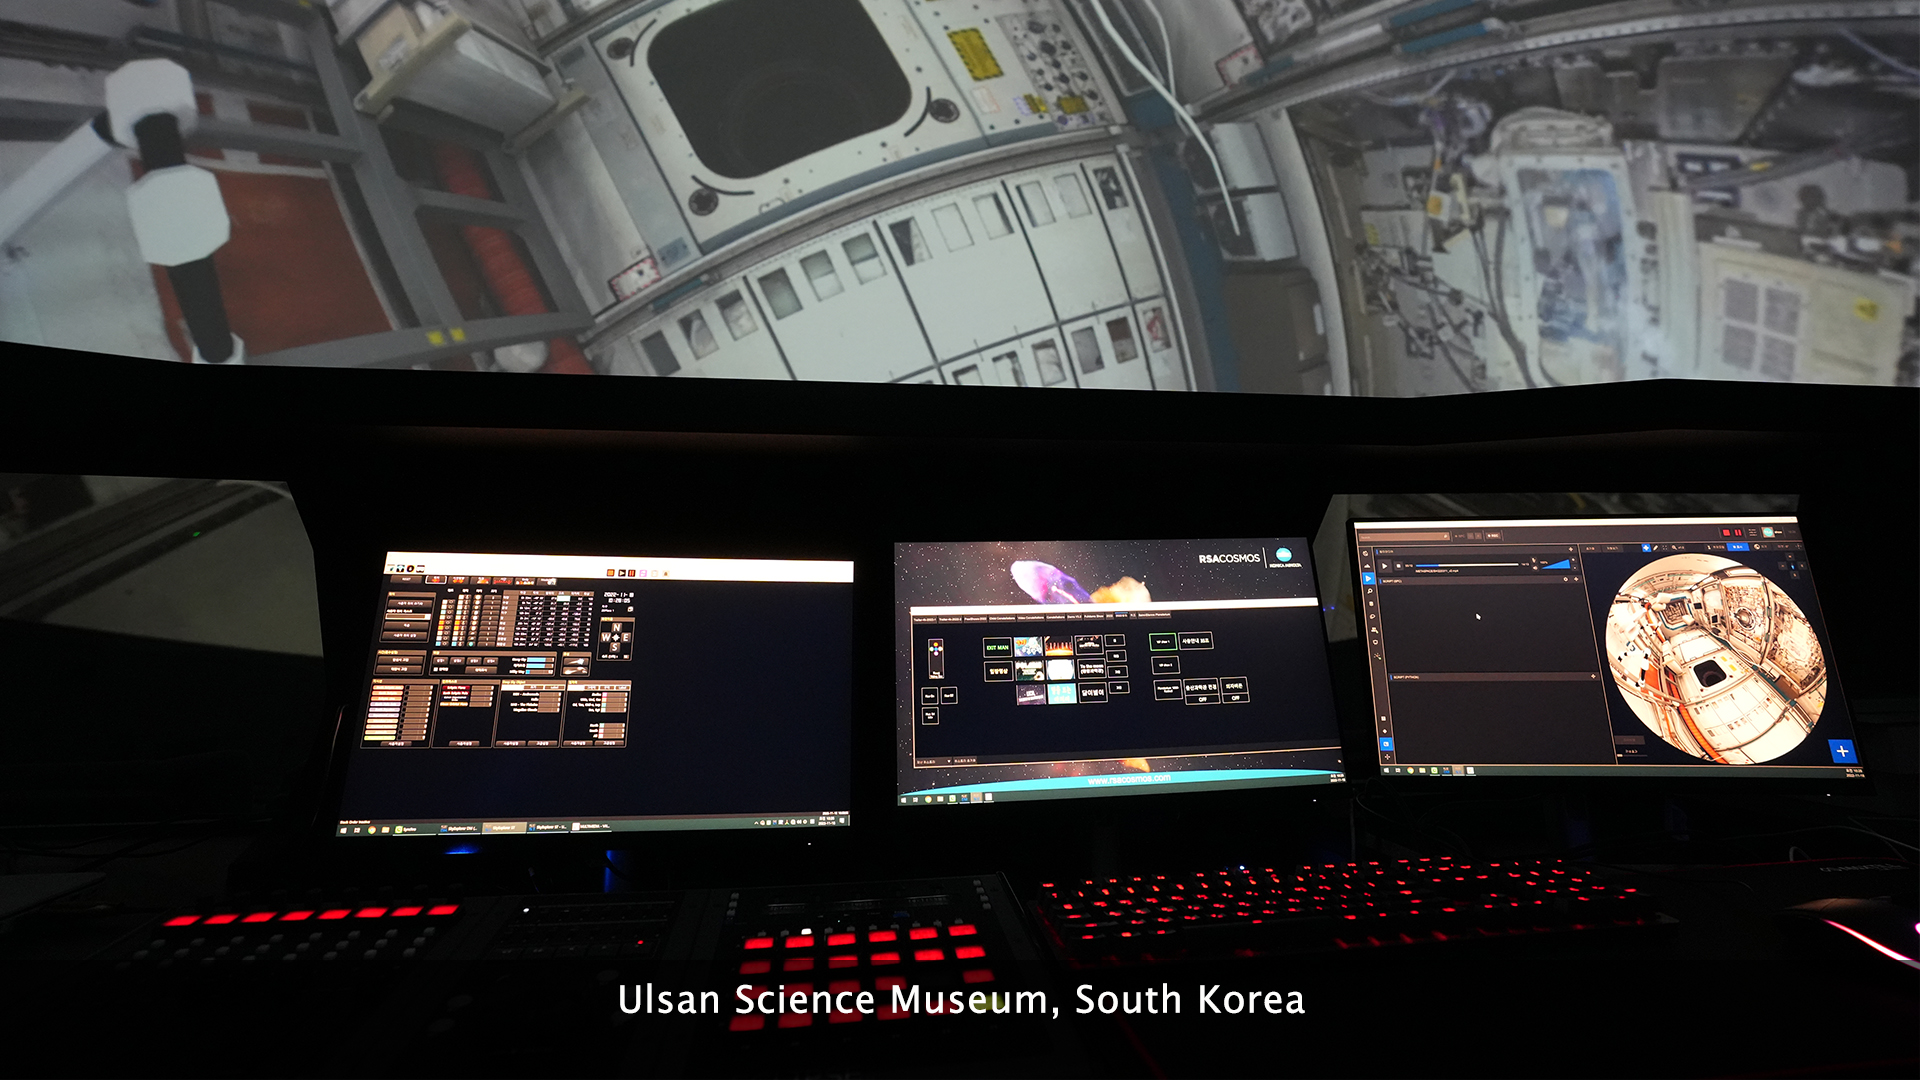 Ulsan Science Museum